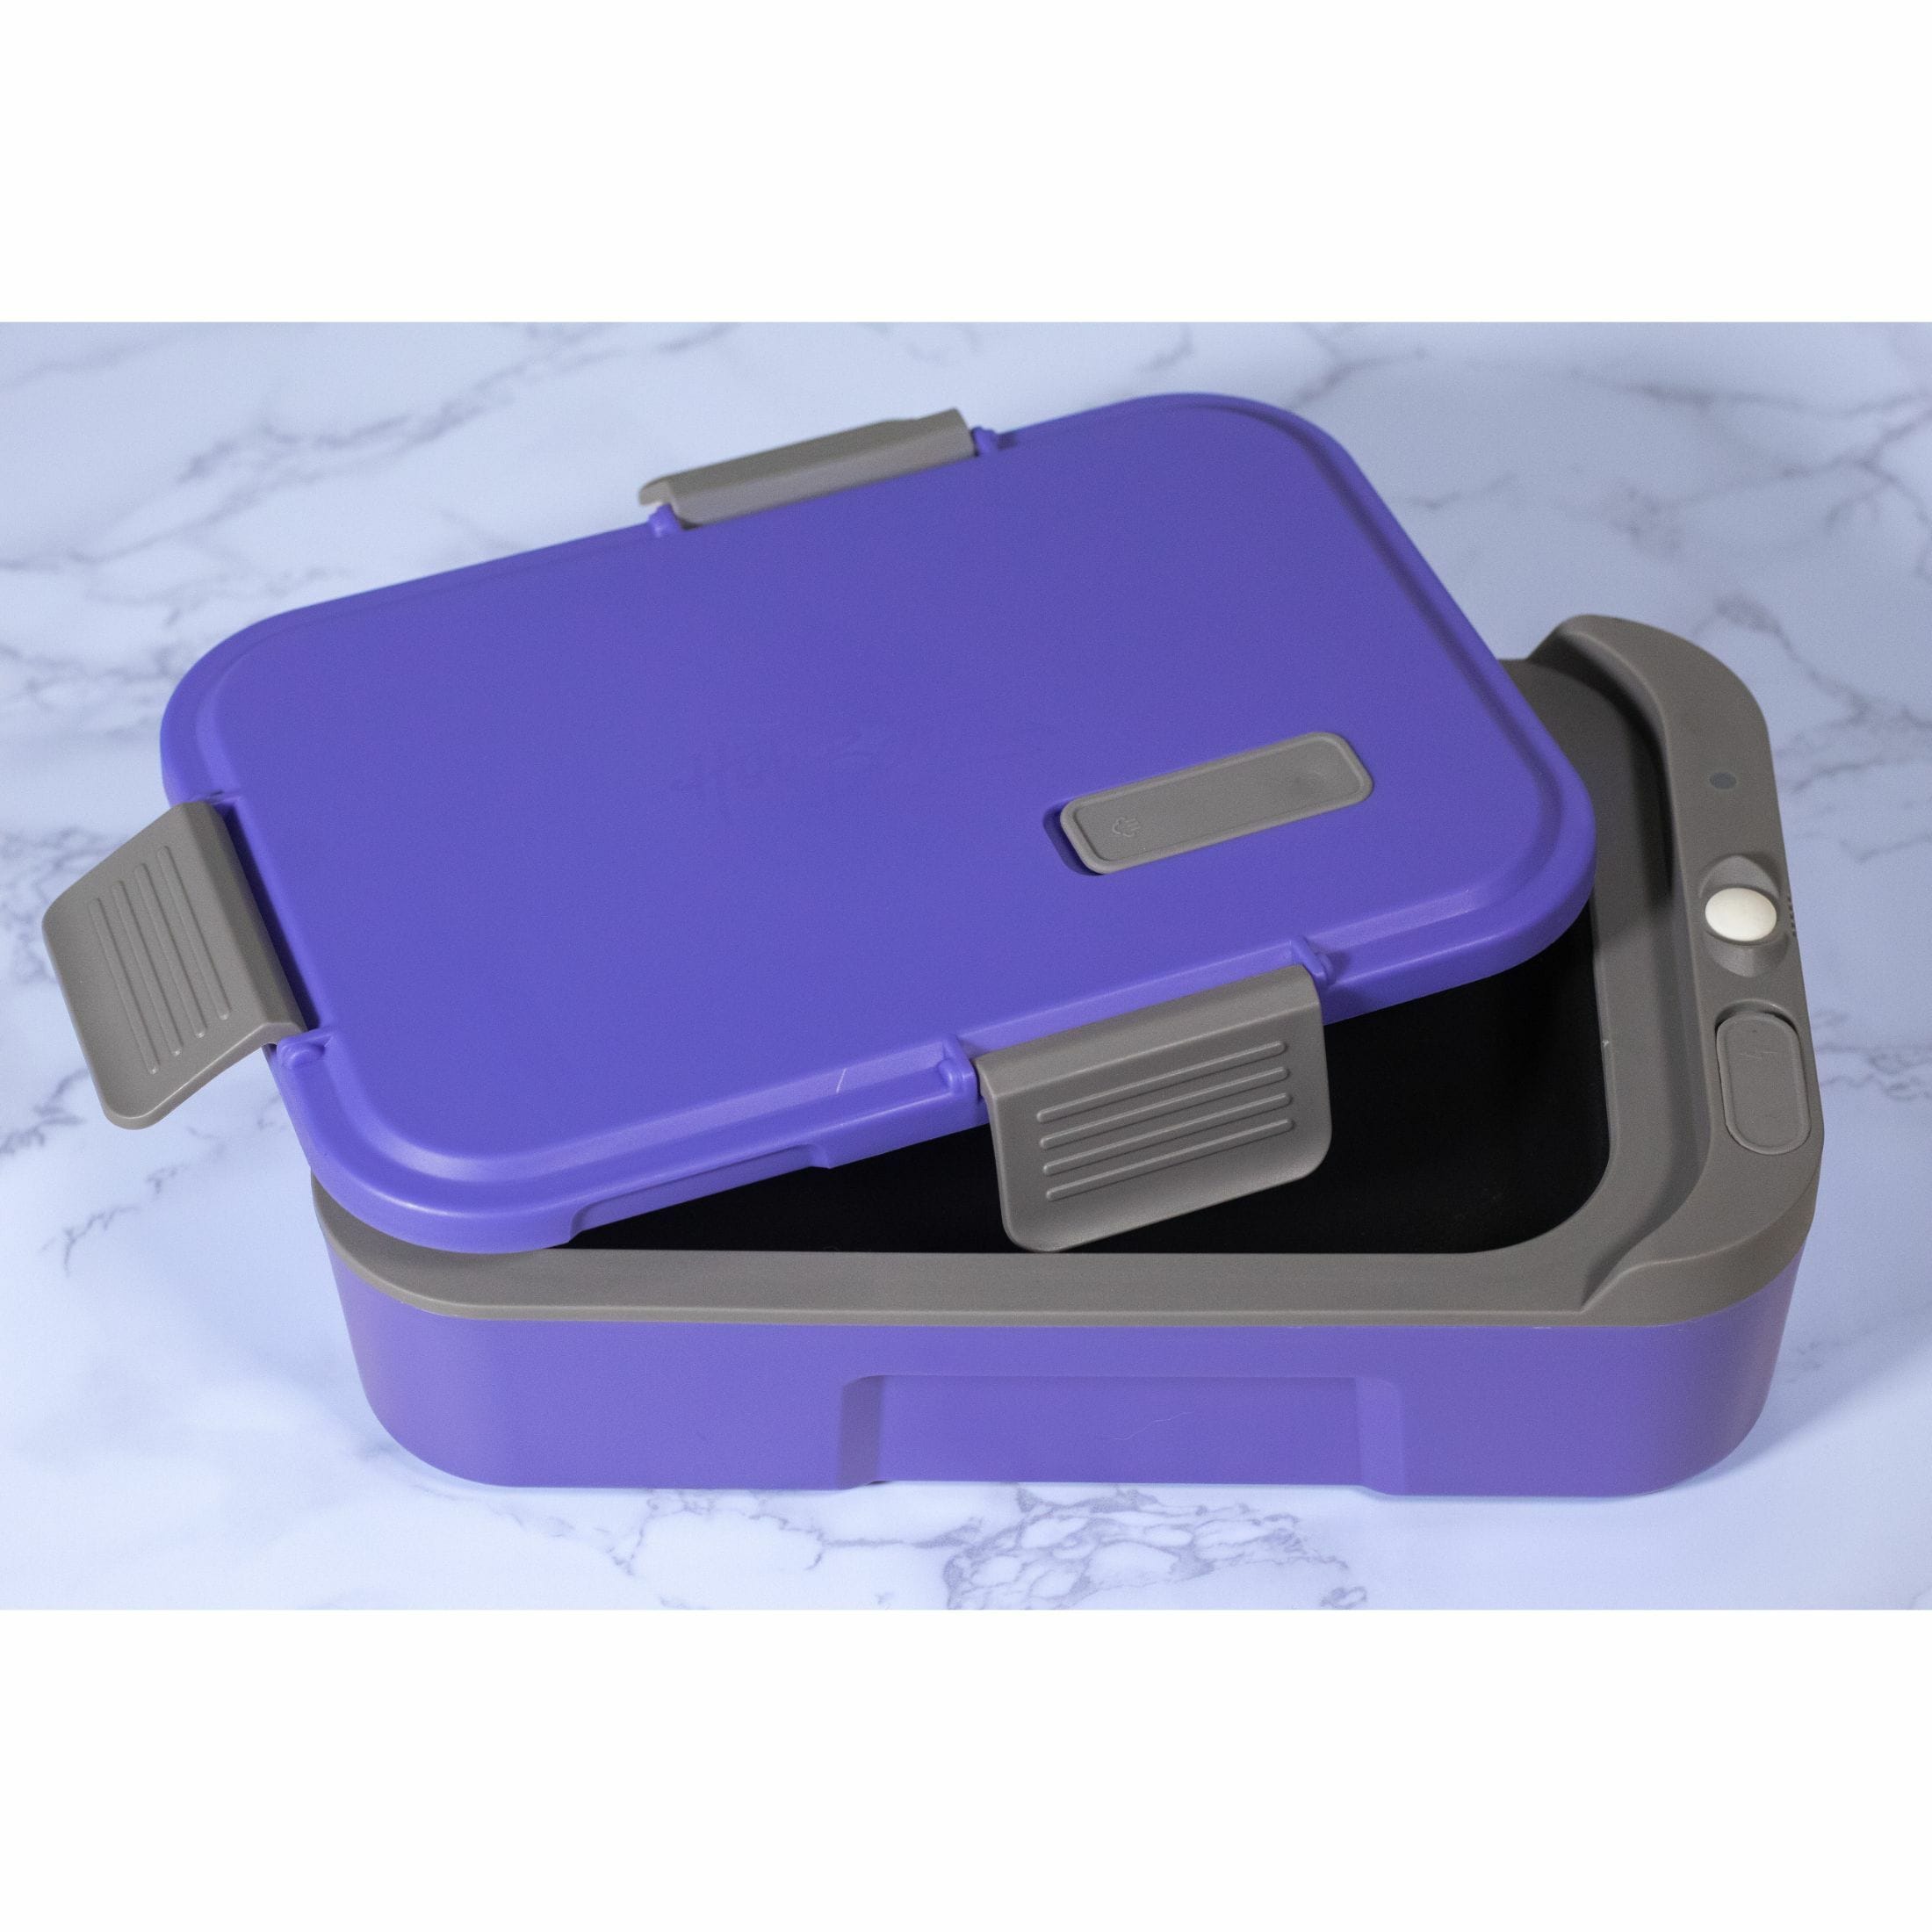 Hot Bento Self-heating Lunch Box, Purple